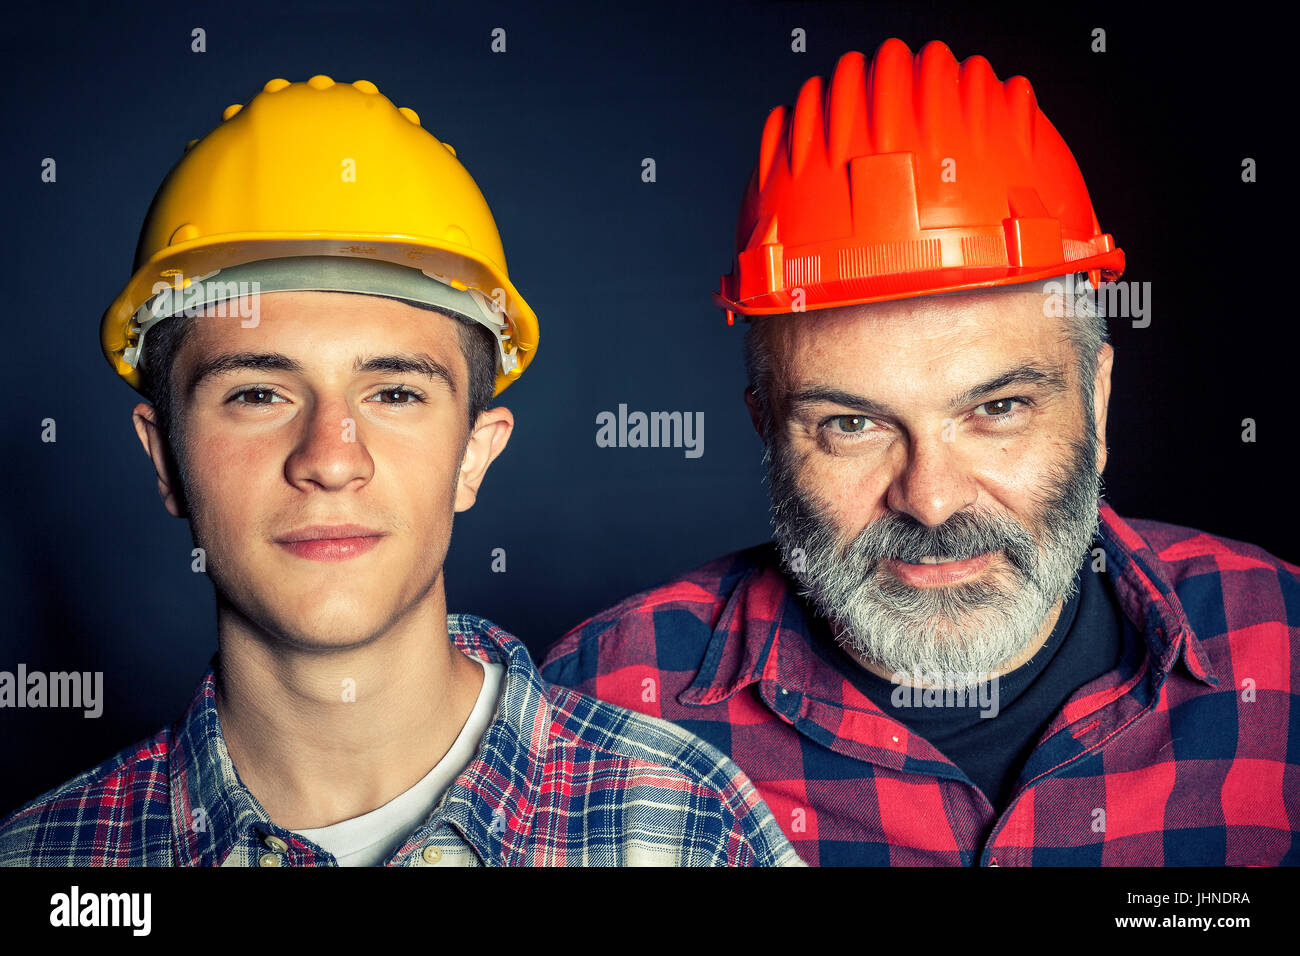 Vater und Sohn mit Konstruktor Schutz Helm Stockfoto